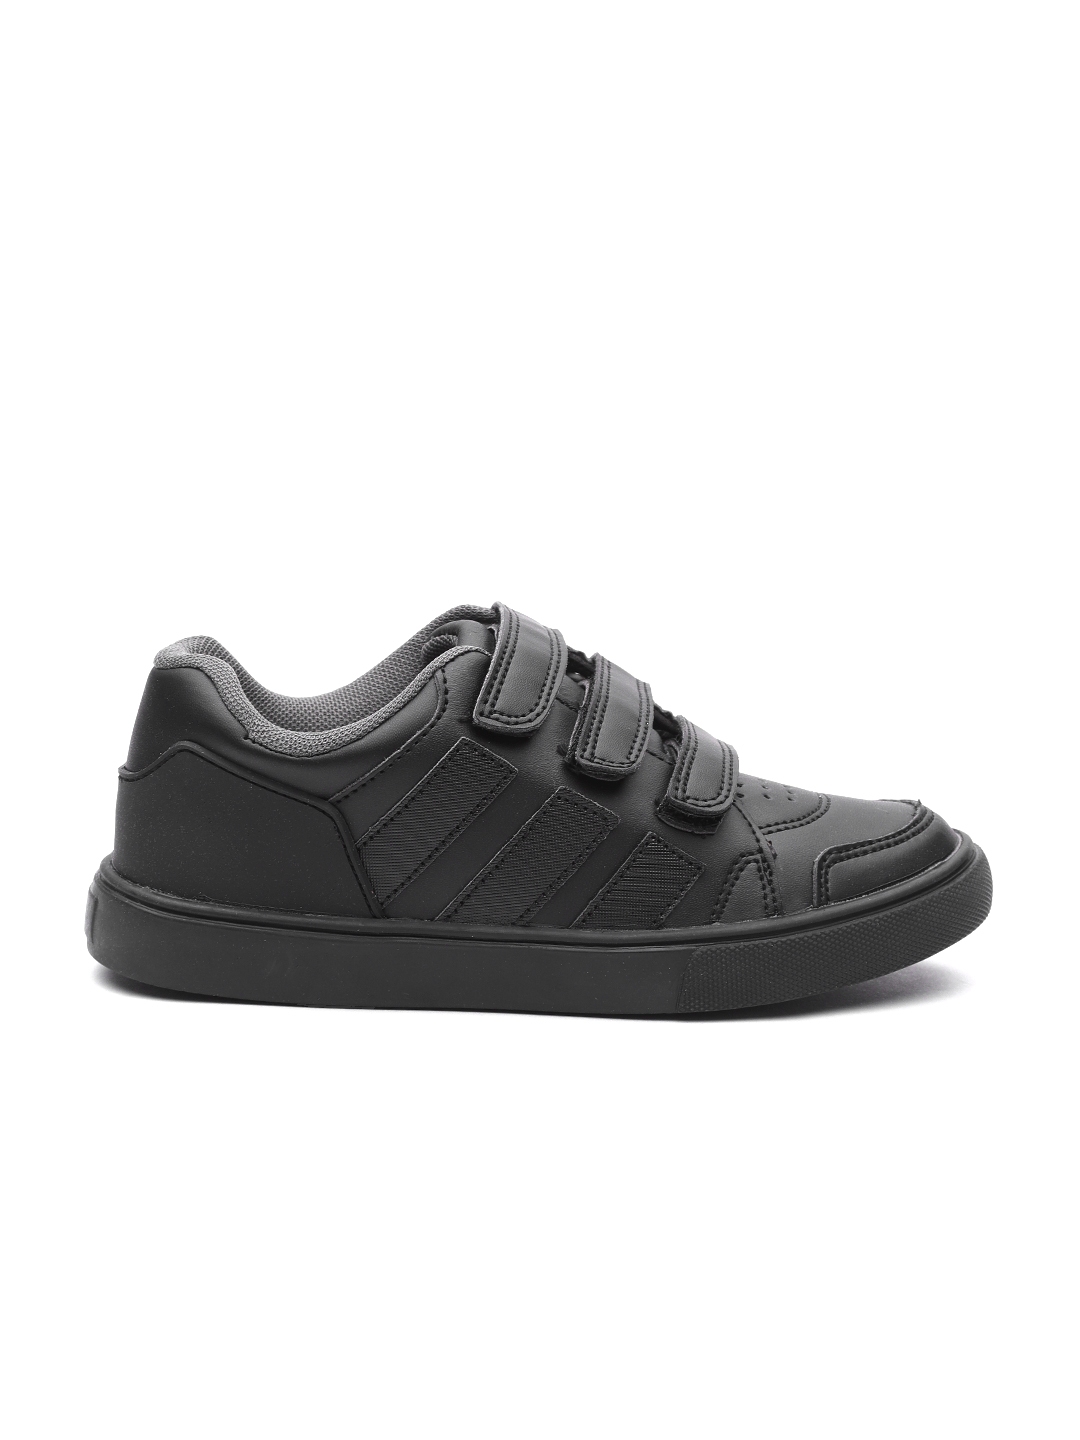 carlton london black sneakers